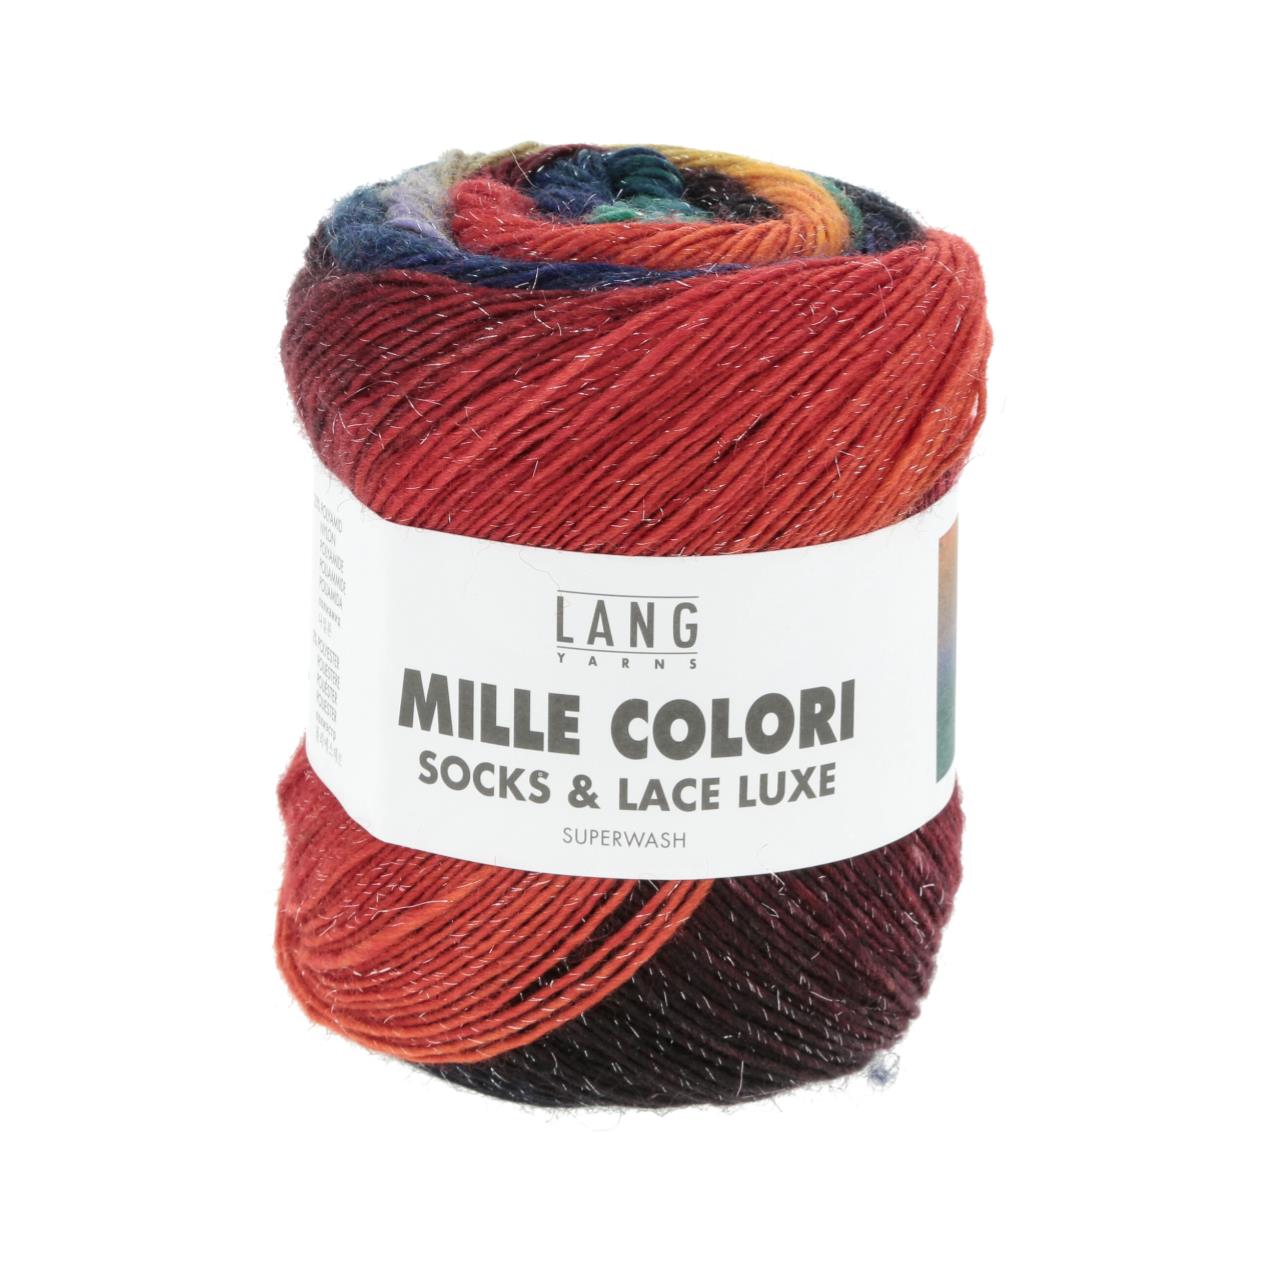 Mille Colori Socks & Lace Luxe 208 Blau/Grün/Rot